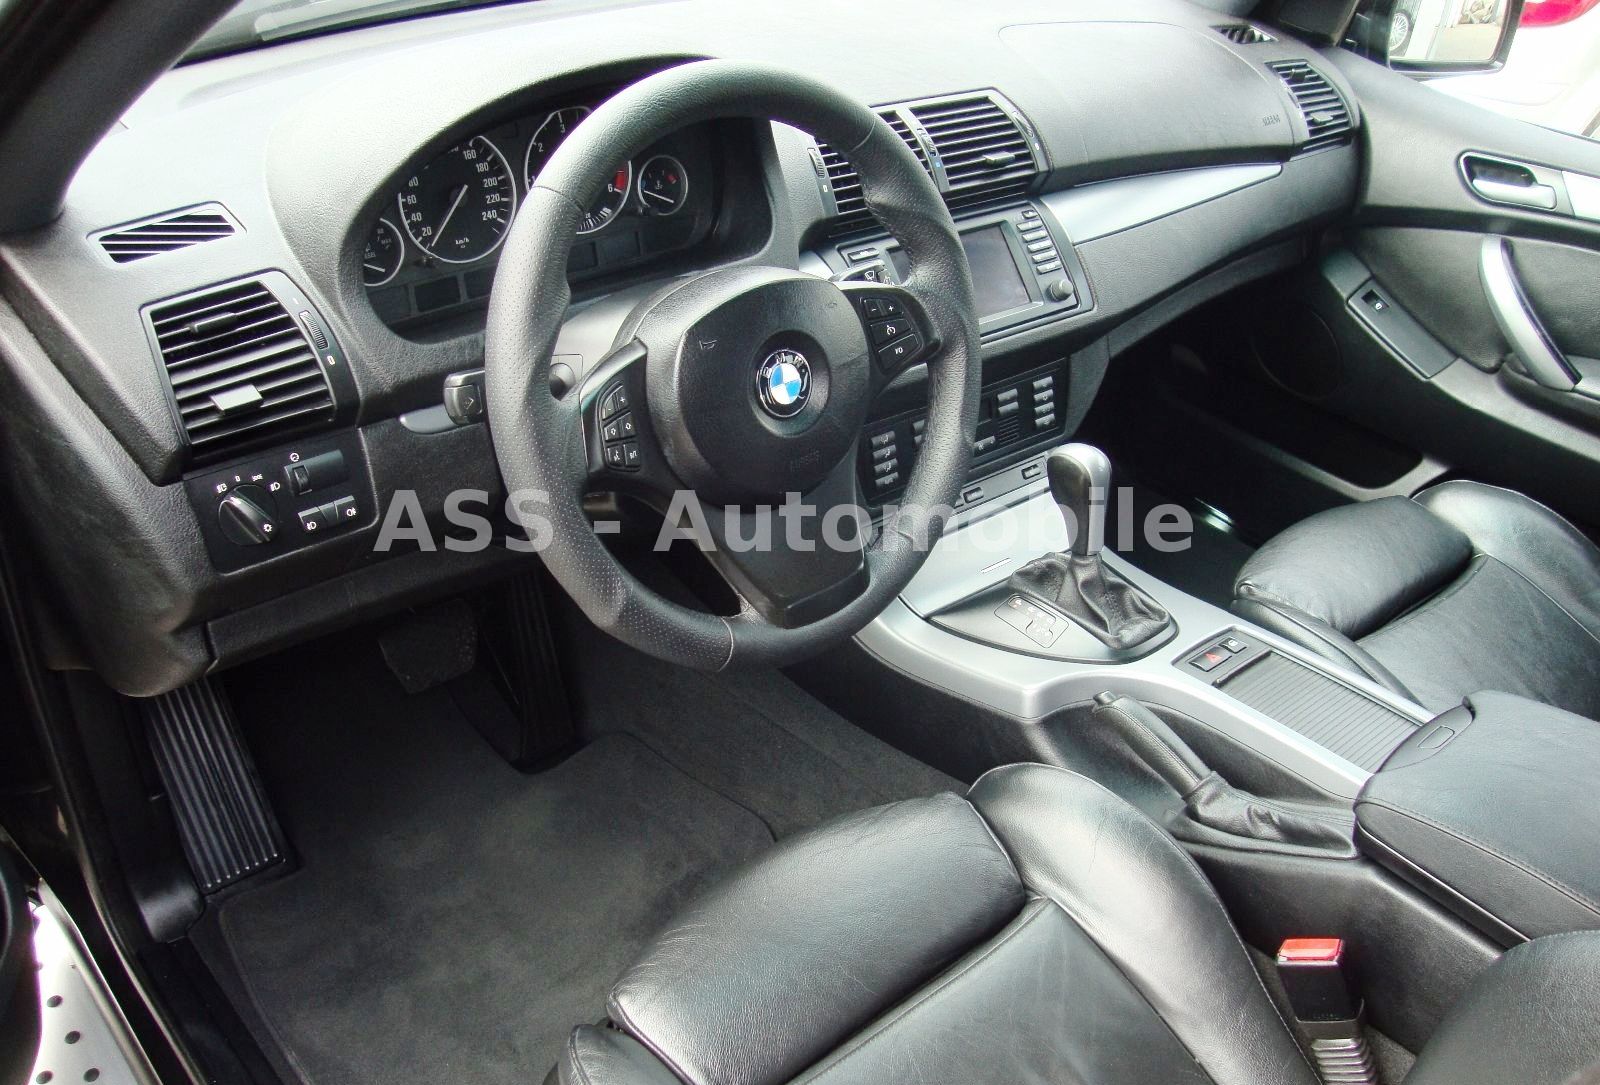 Left hand drive car BMW X5 (01/04/2006) - 